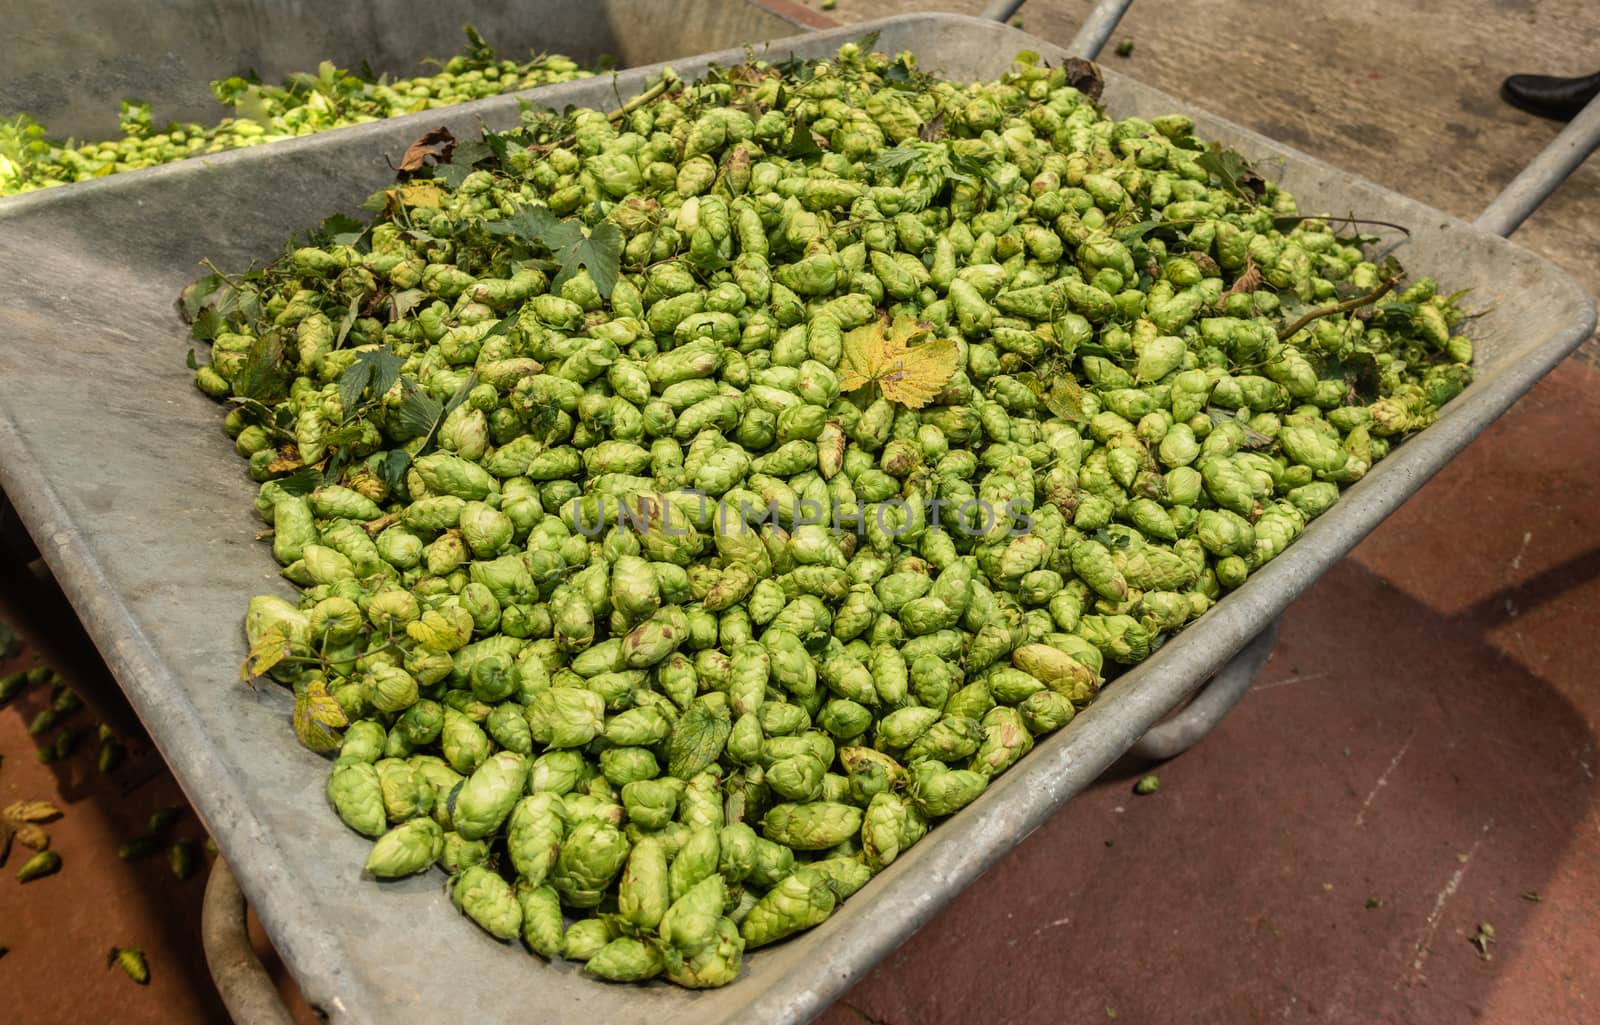 Wheelbarrow full of hops cones, Proven Belgium. by Claudine